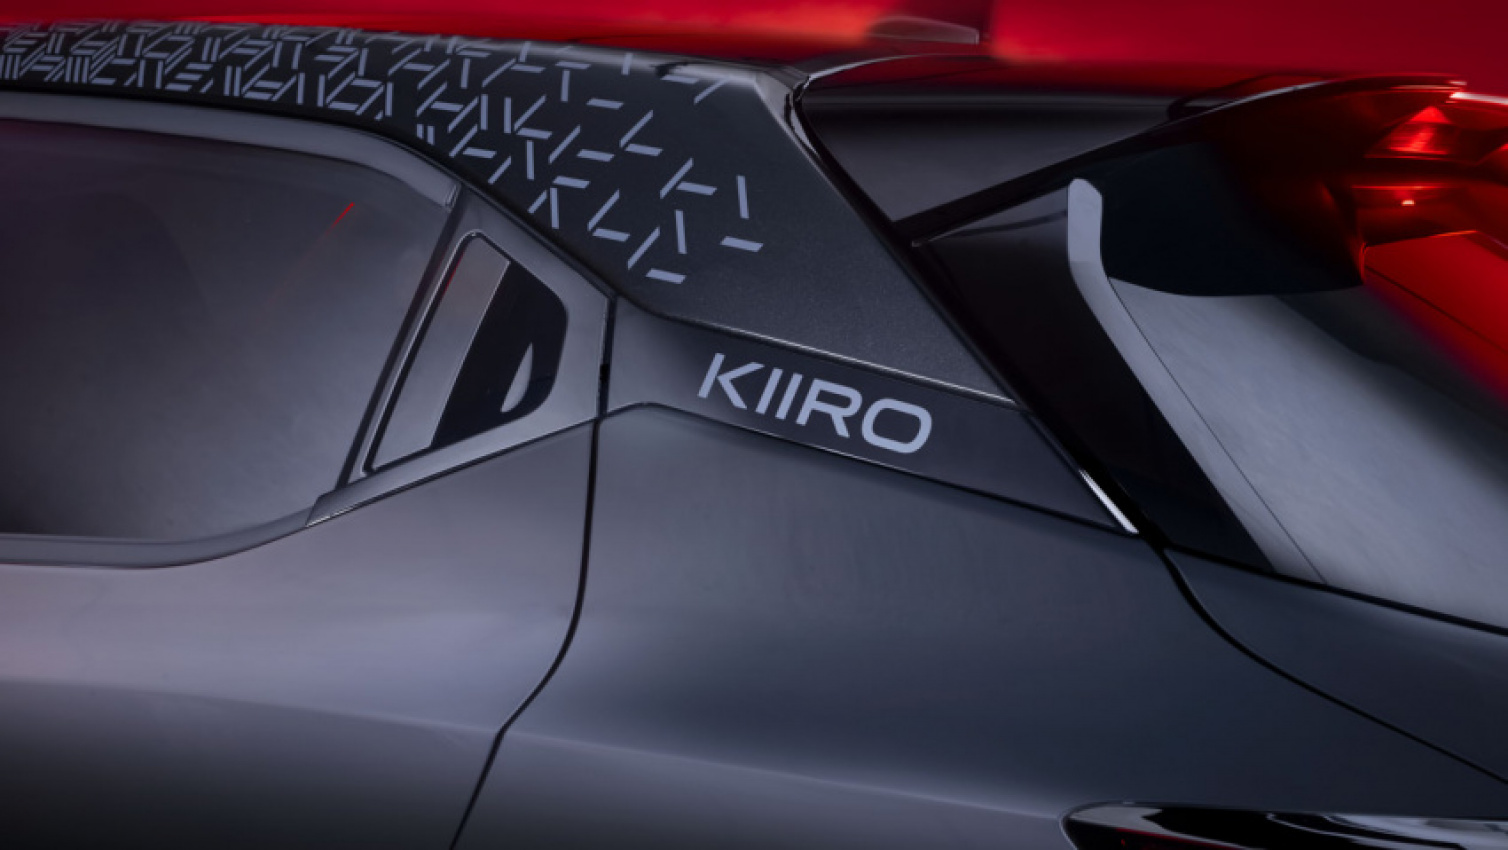 autos, cars, nissan, reviews, juke, nissan juke, small suvs, new batman-inspired nissan juke kiiro revealed